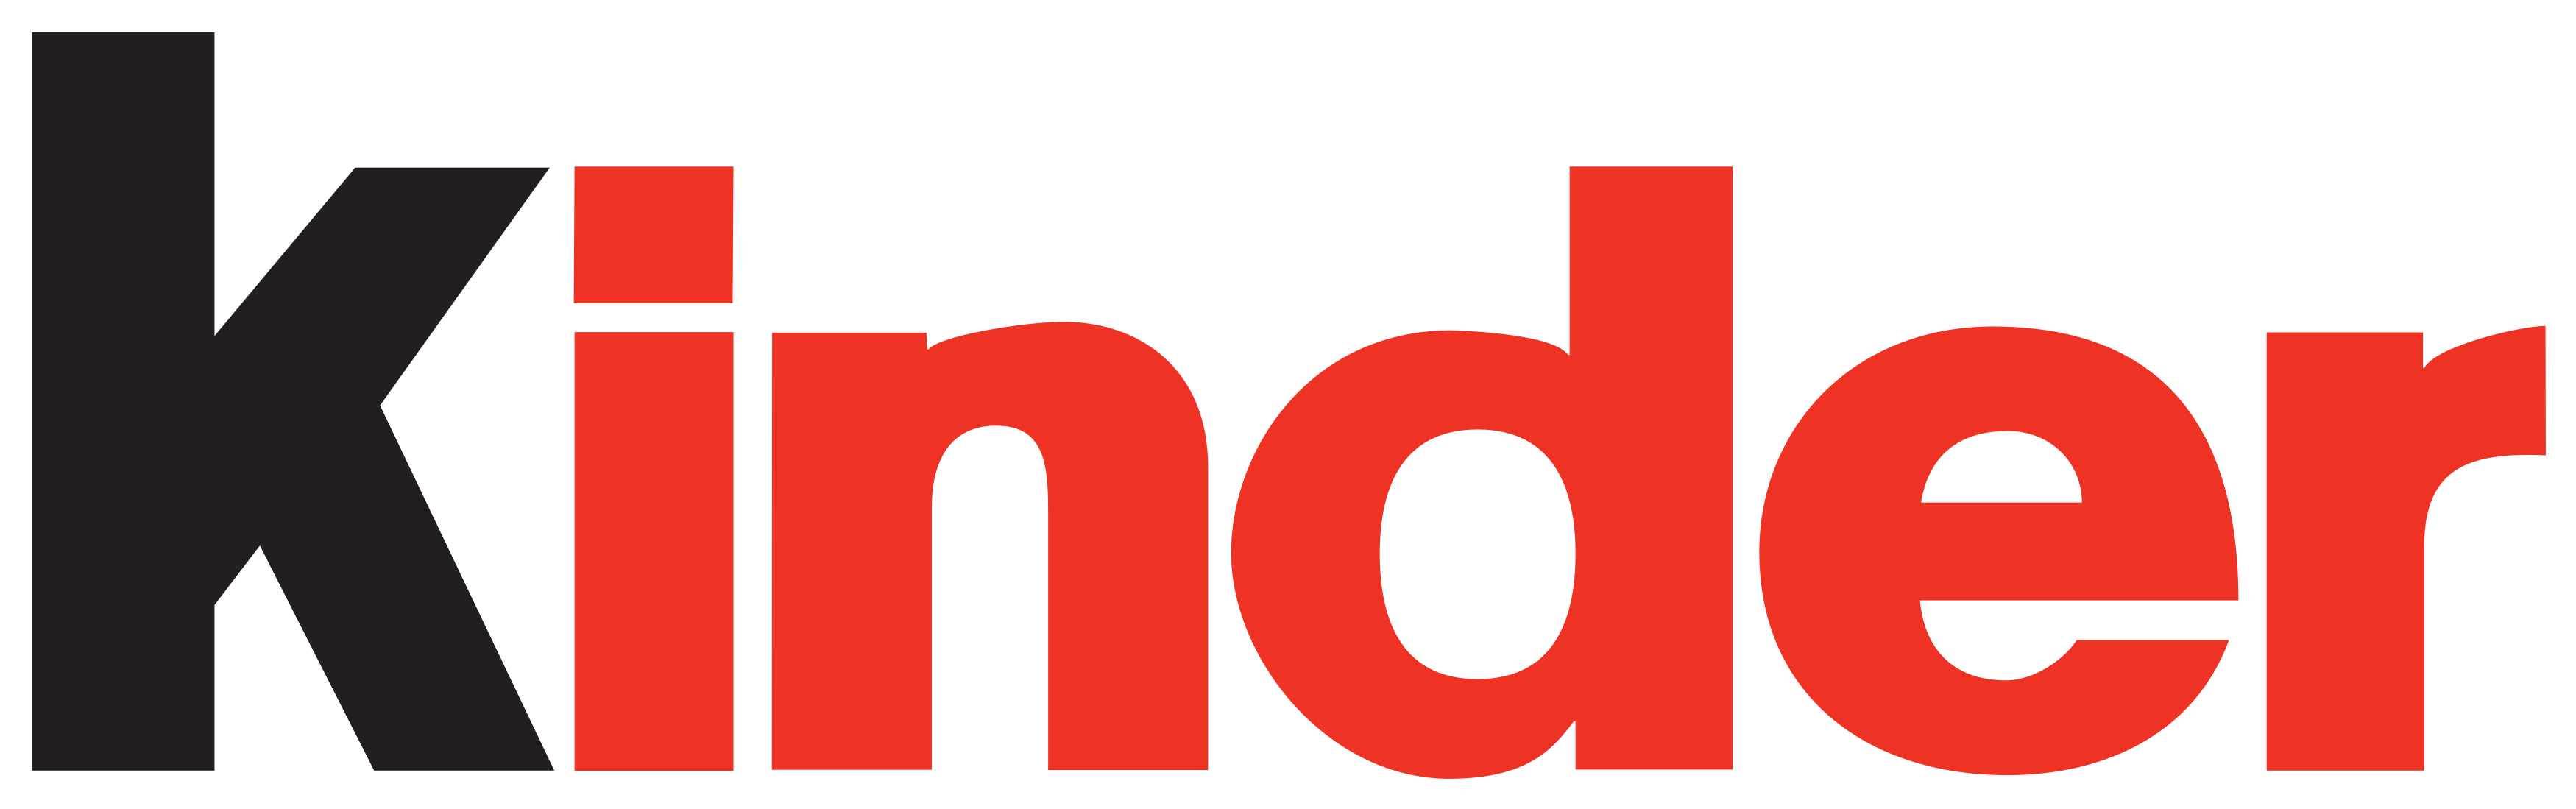 kinder-logo - PNG - Download de Logotipos